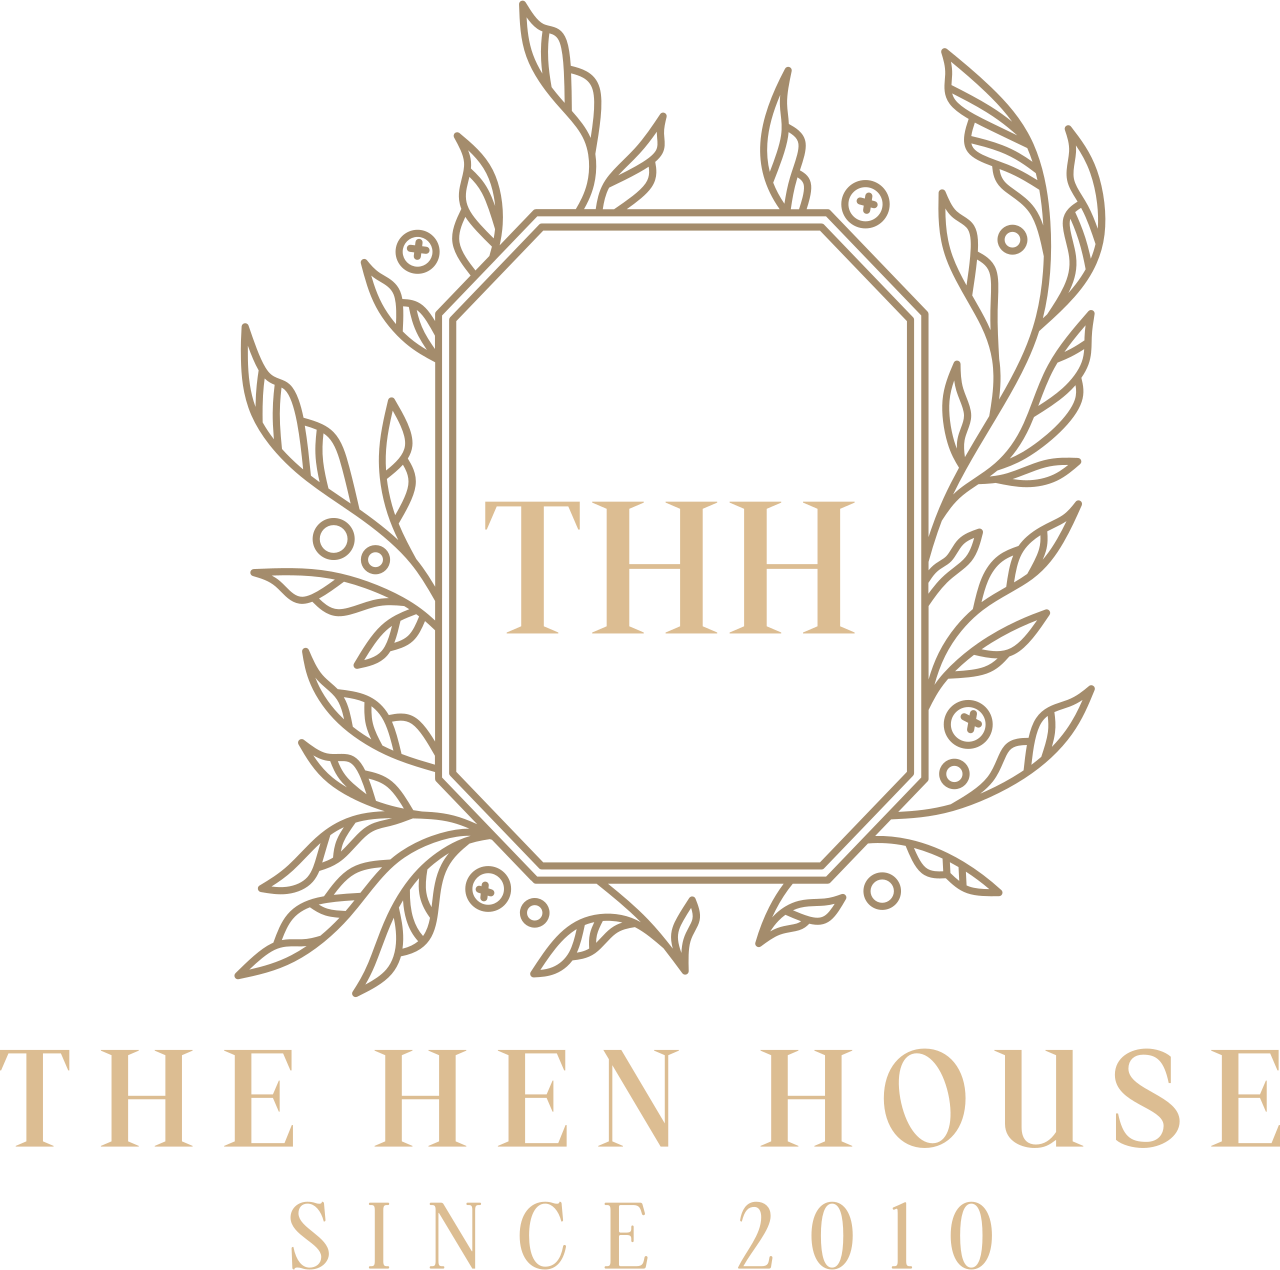 The Hen House's logo